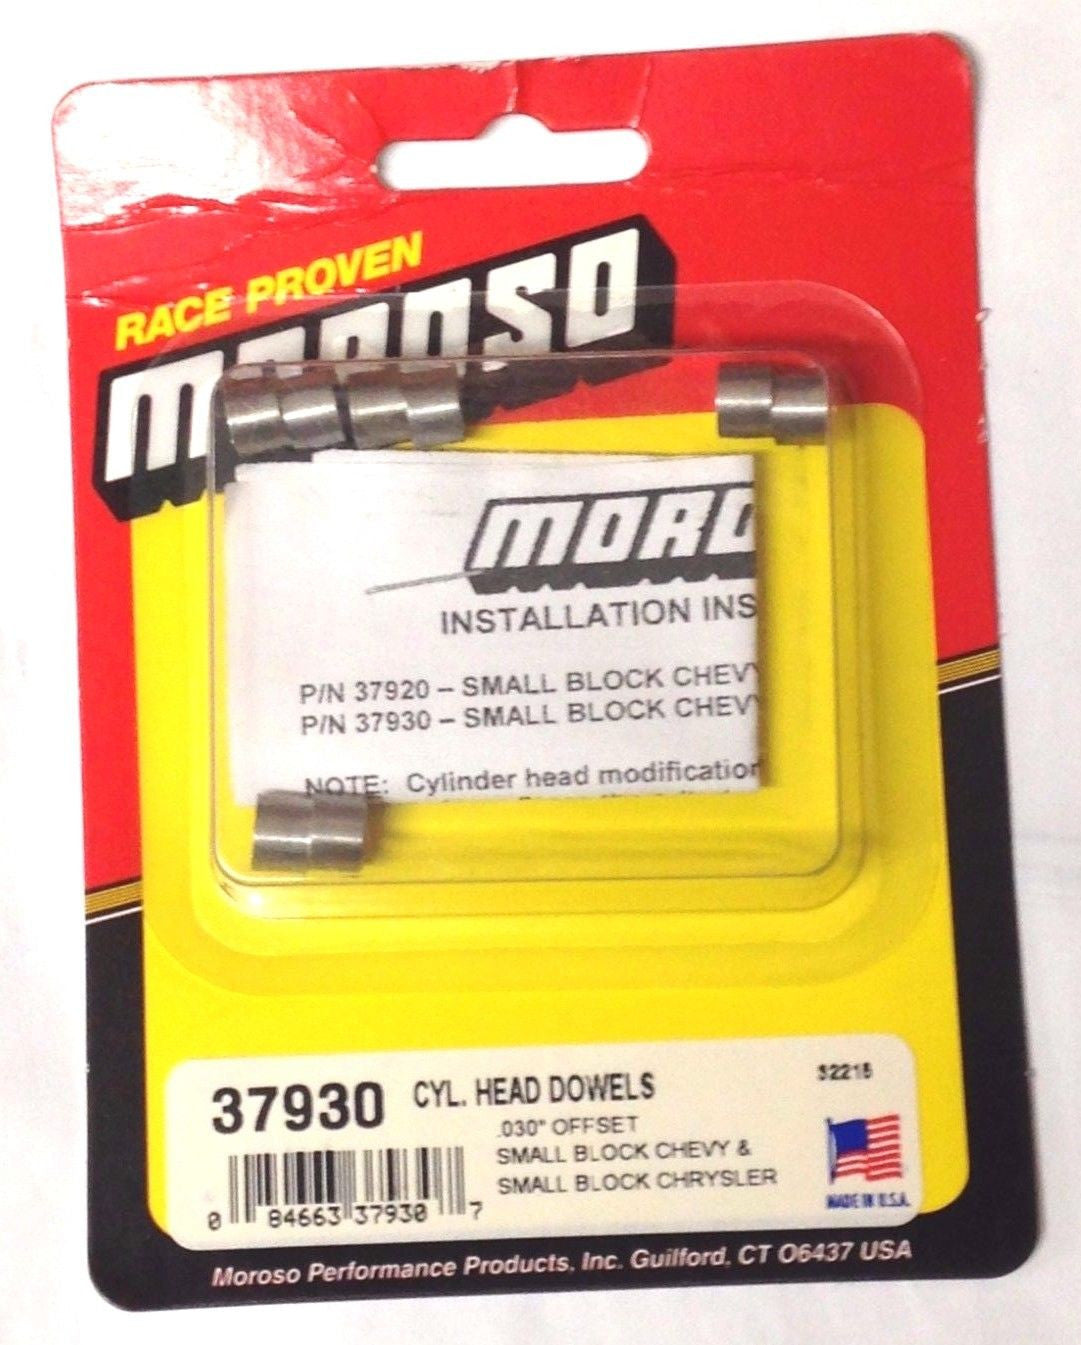 Moroso 37930 Offset Cylinder Head Dowels .030 in. Chevy SB, Chrysler SB, 4/pkg.